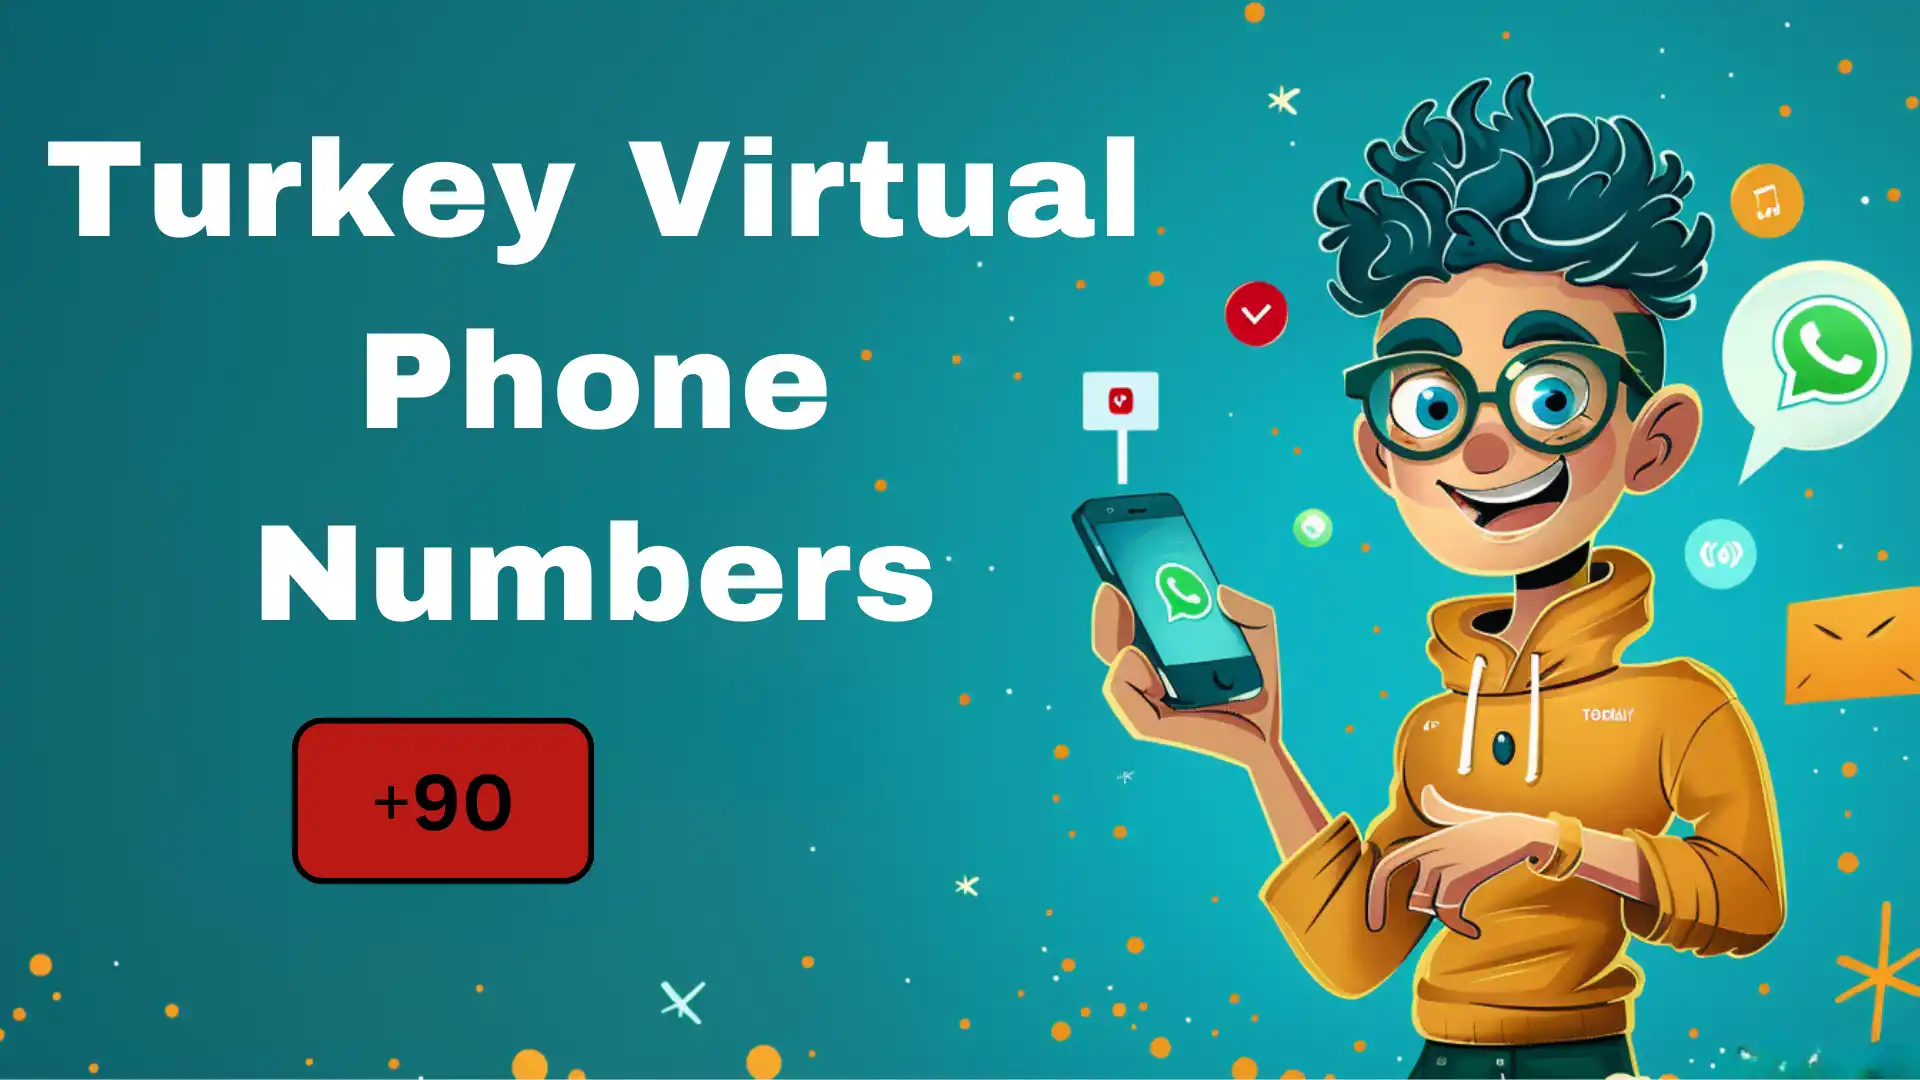 Turkey Virtual Phone number